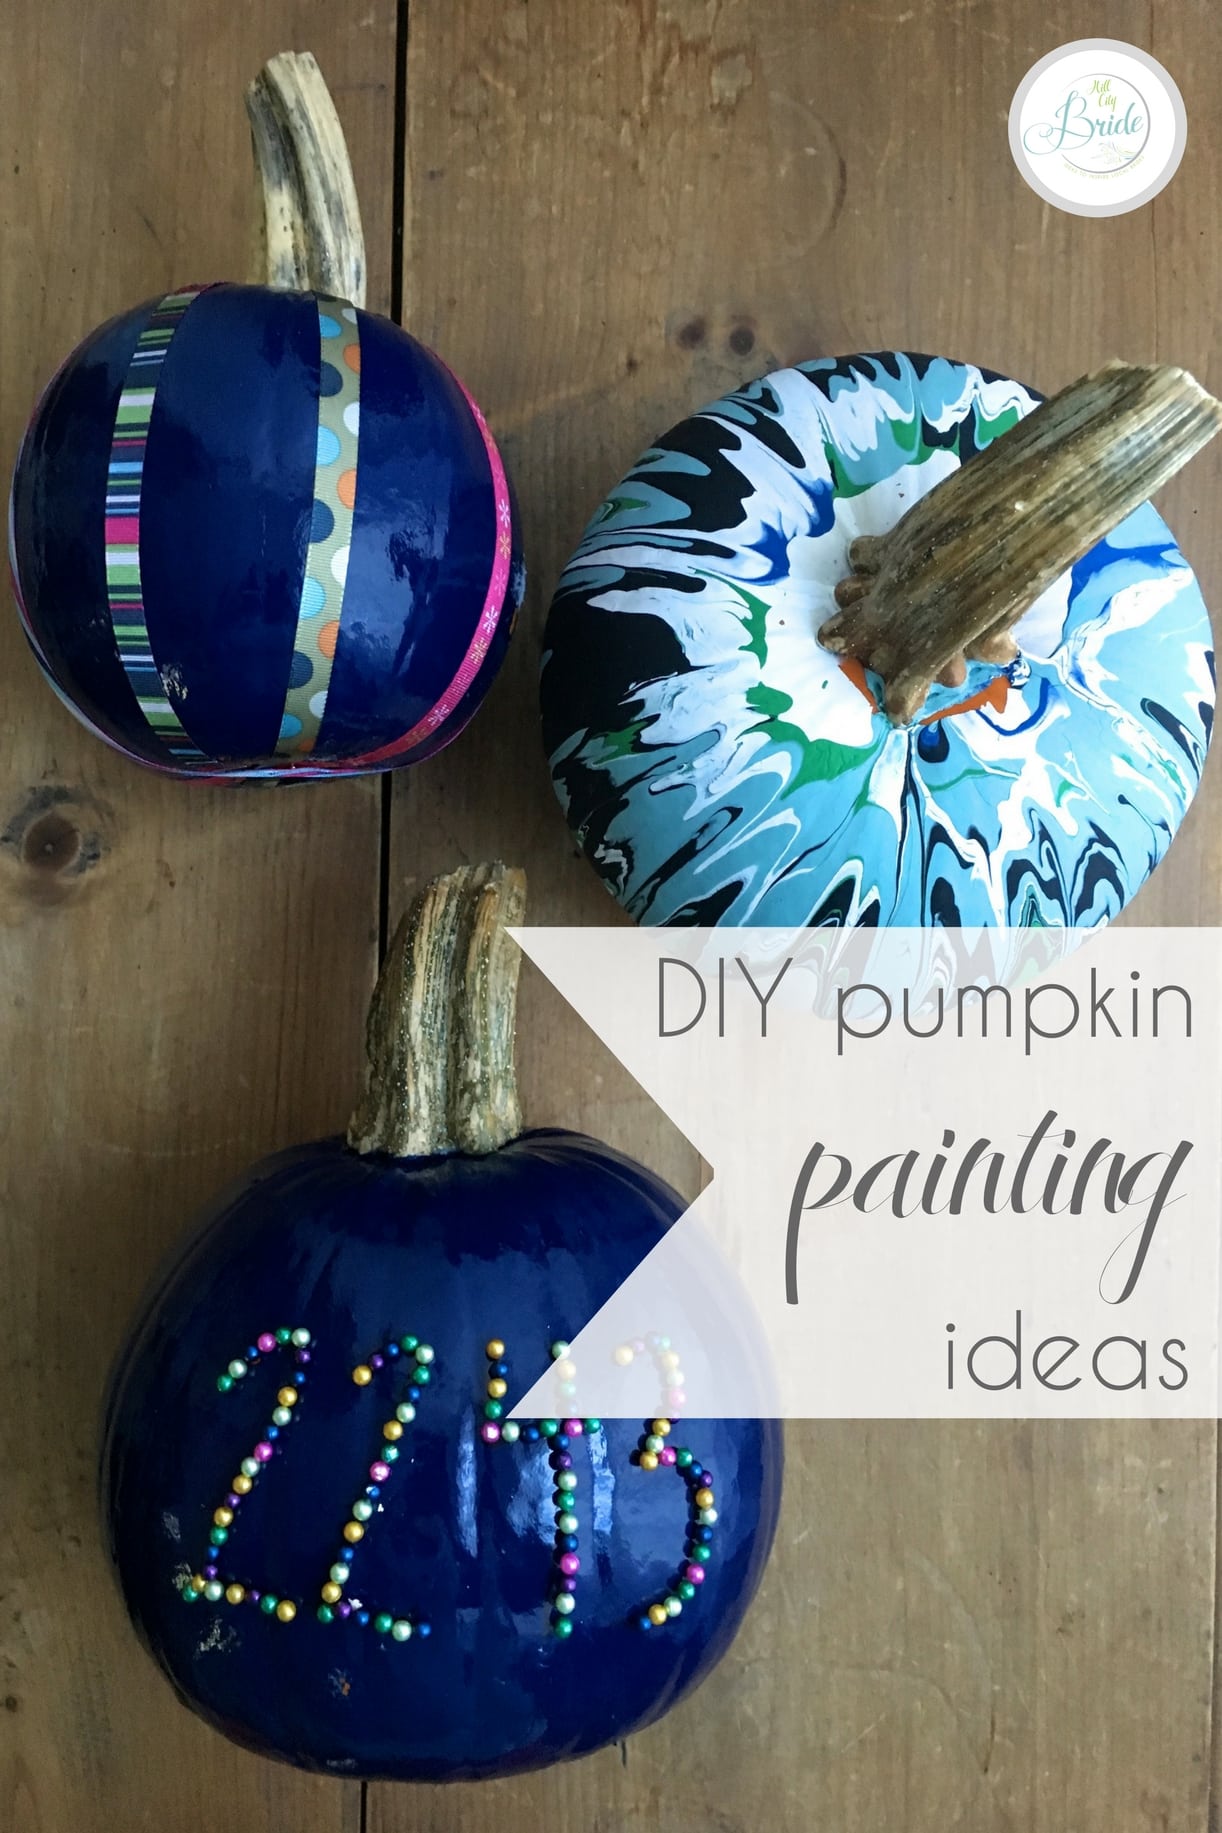 DIY Pumpkin Painting Ideas as seen on Hill City Bride Virginia Blog